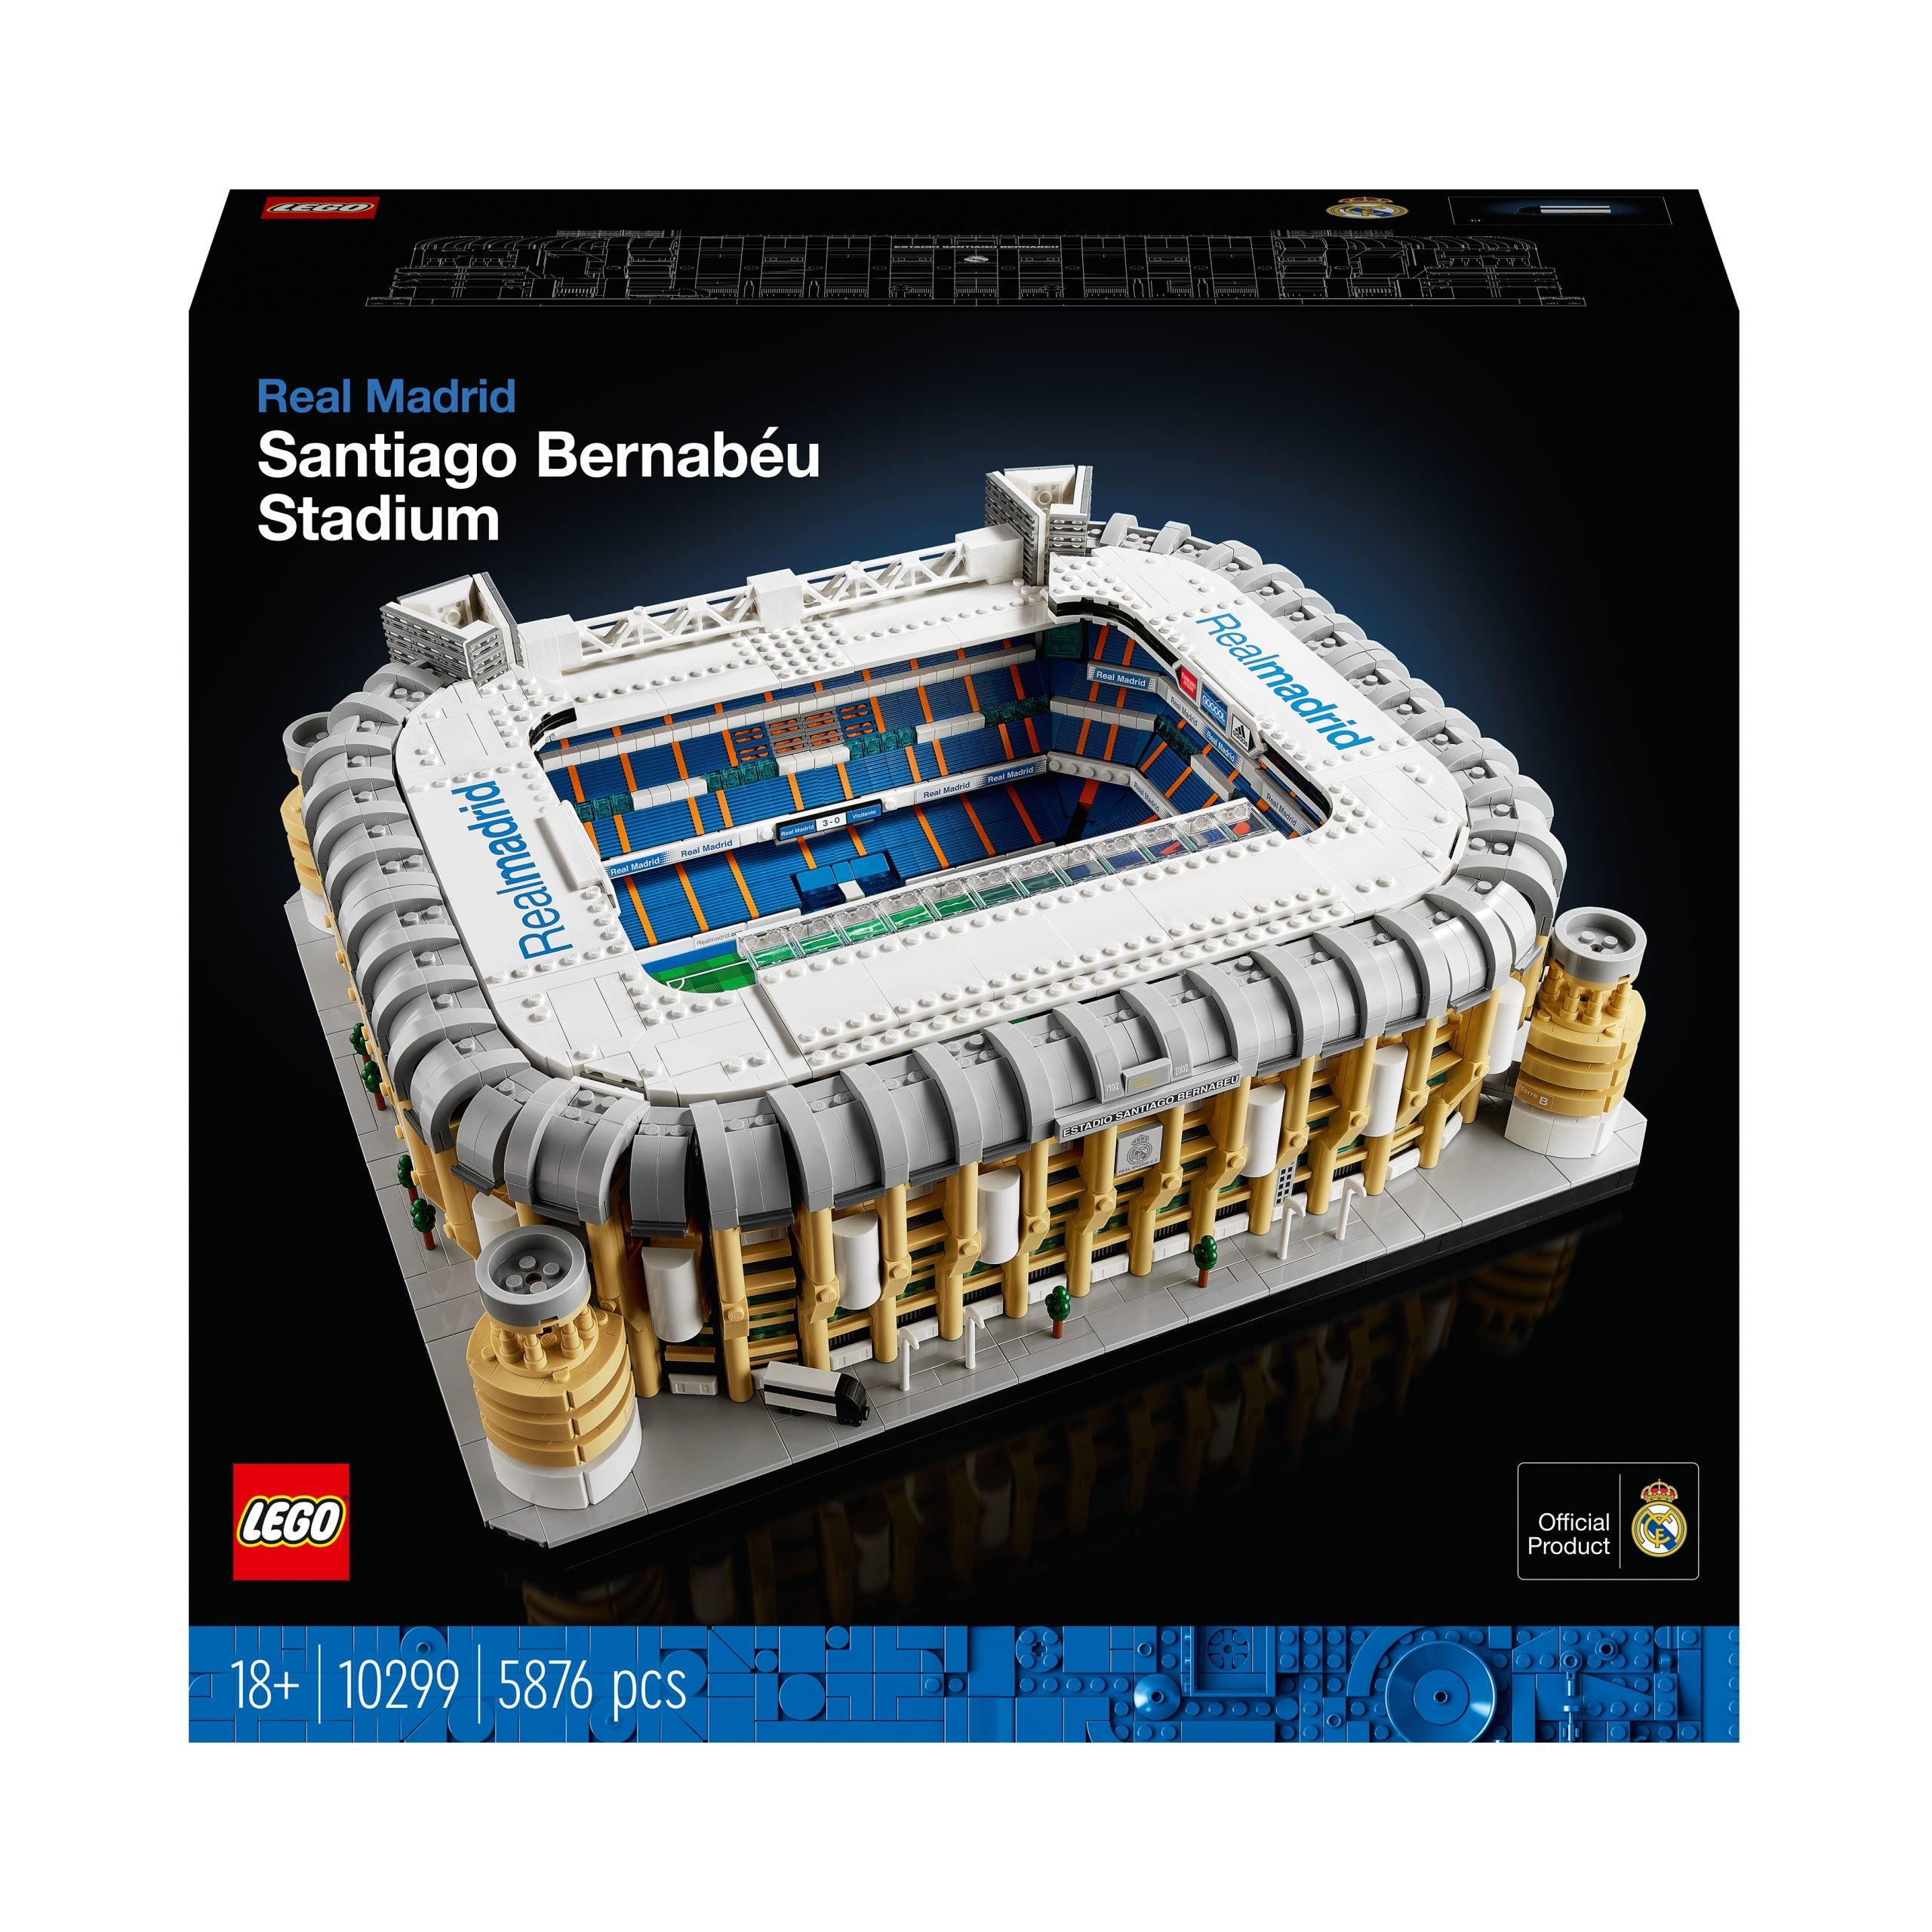 10299 - LEGO - Creator Expert - Stadio del Real Madrid  Santiago Bernabéu